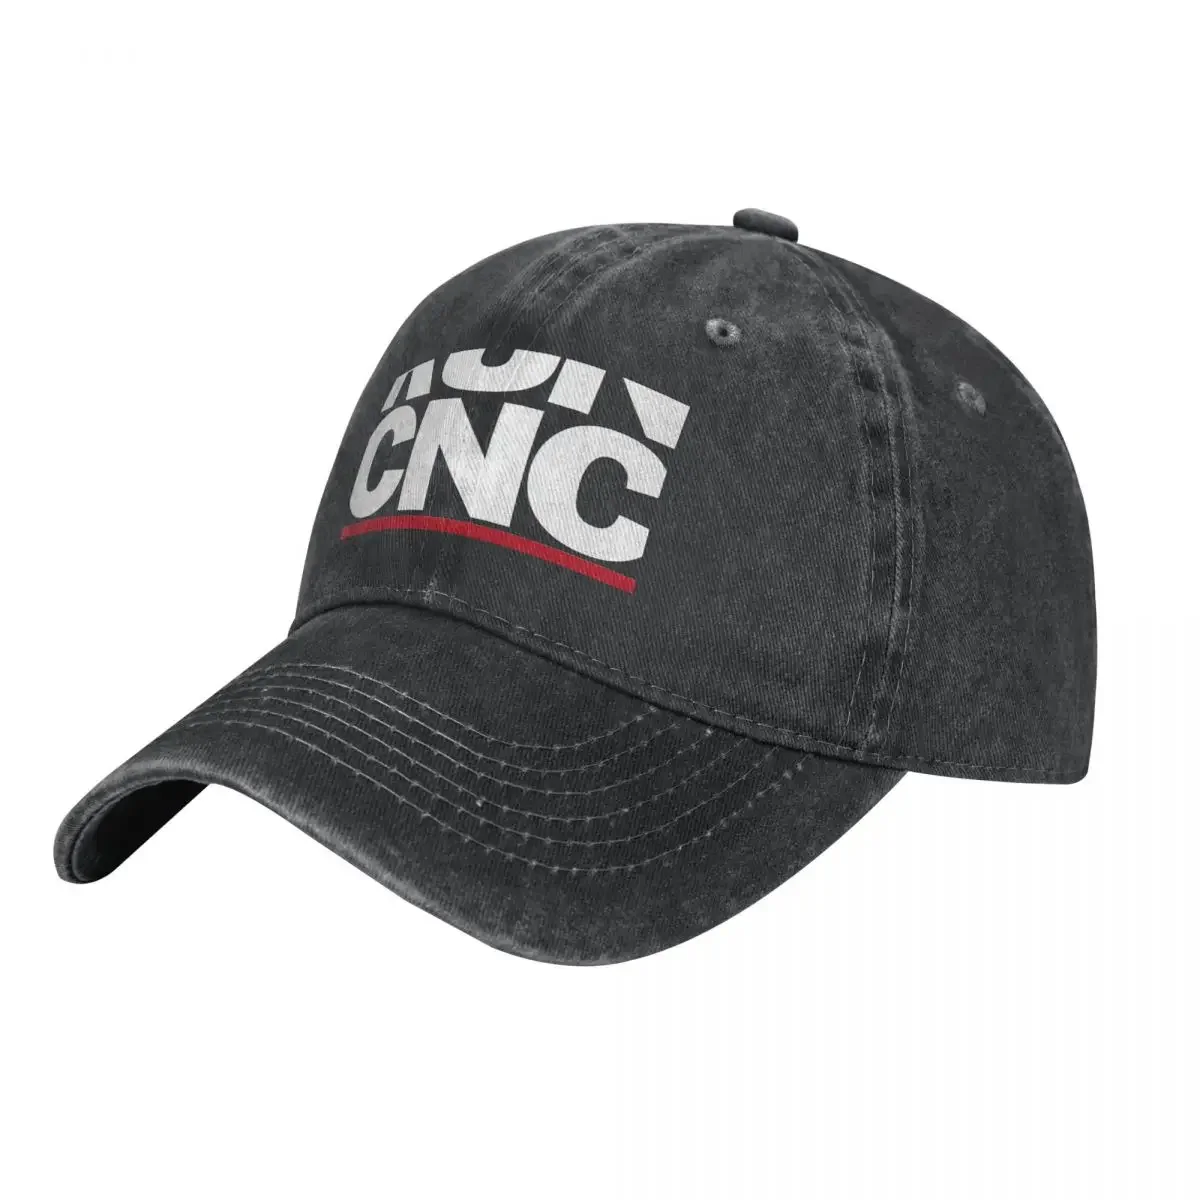 RUN CNC Cowboy Hat Trucker Hat Hat Man Luxury Mens Tennis Women's fashion soft flag of hungary heart hat gift dad hat trucker hat cowboy hat